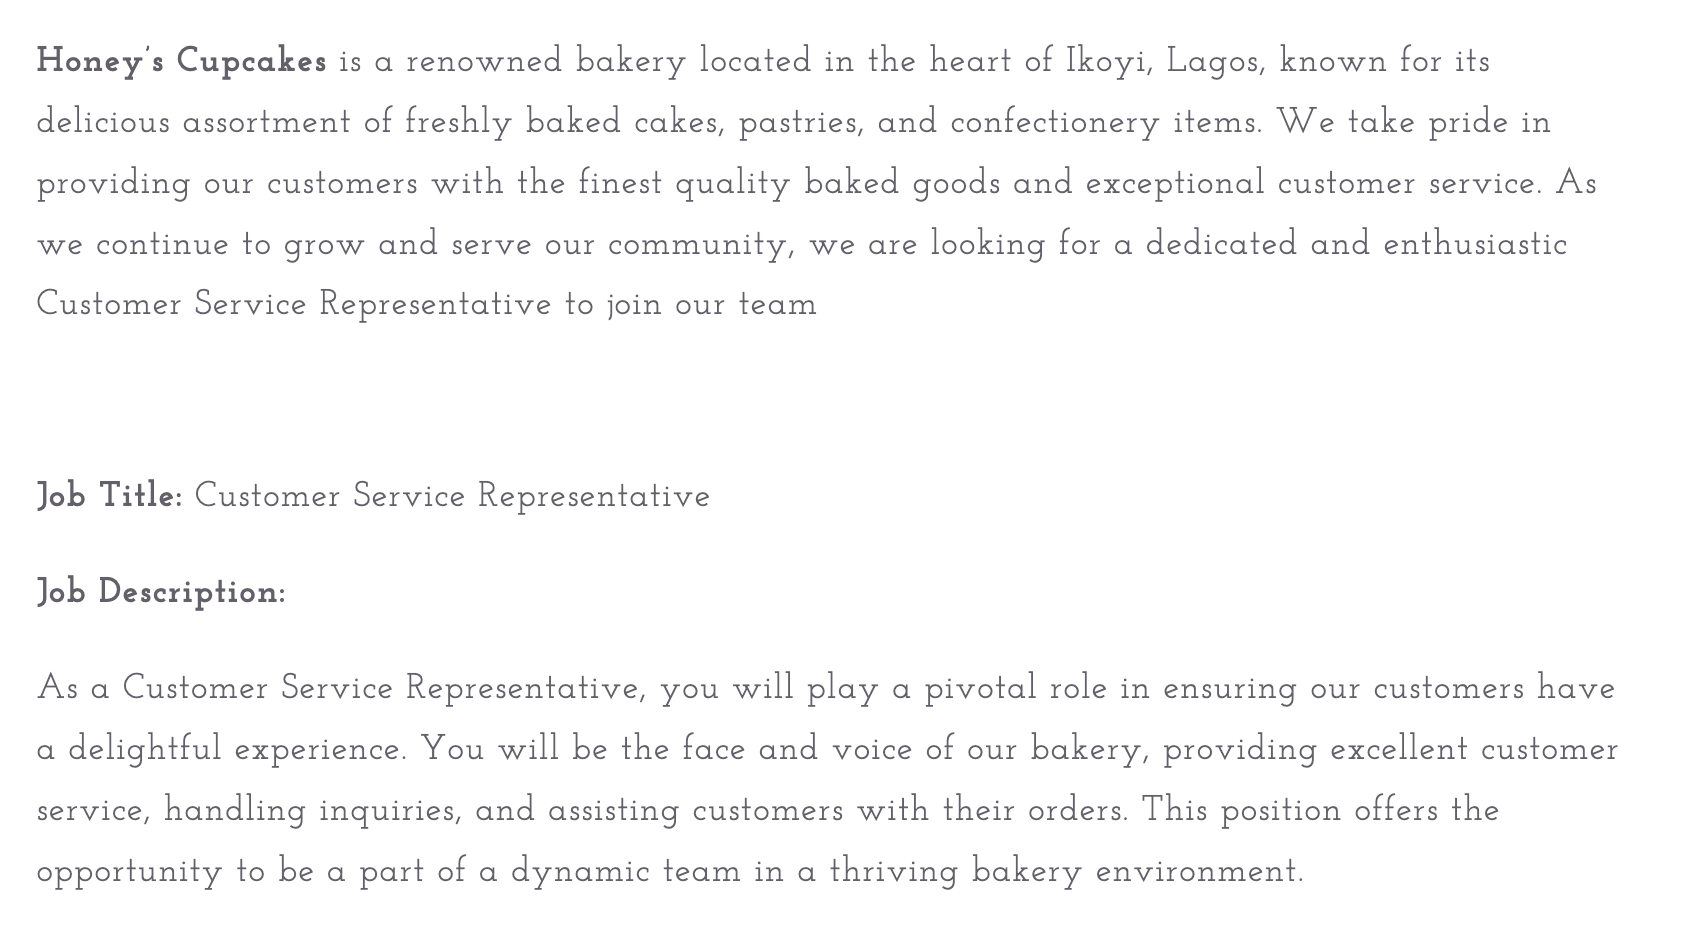 Screenshot of Honey’s Cupcakes customer service representative job ad